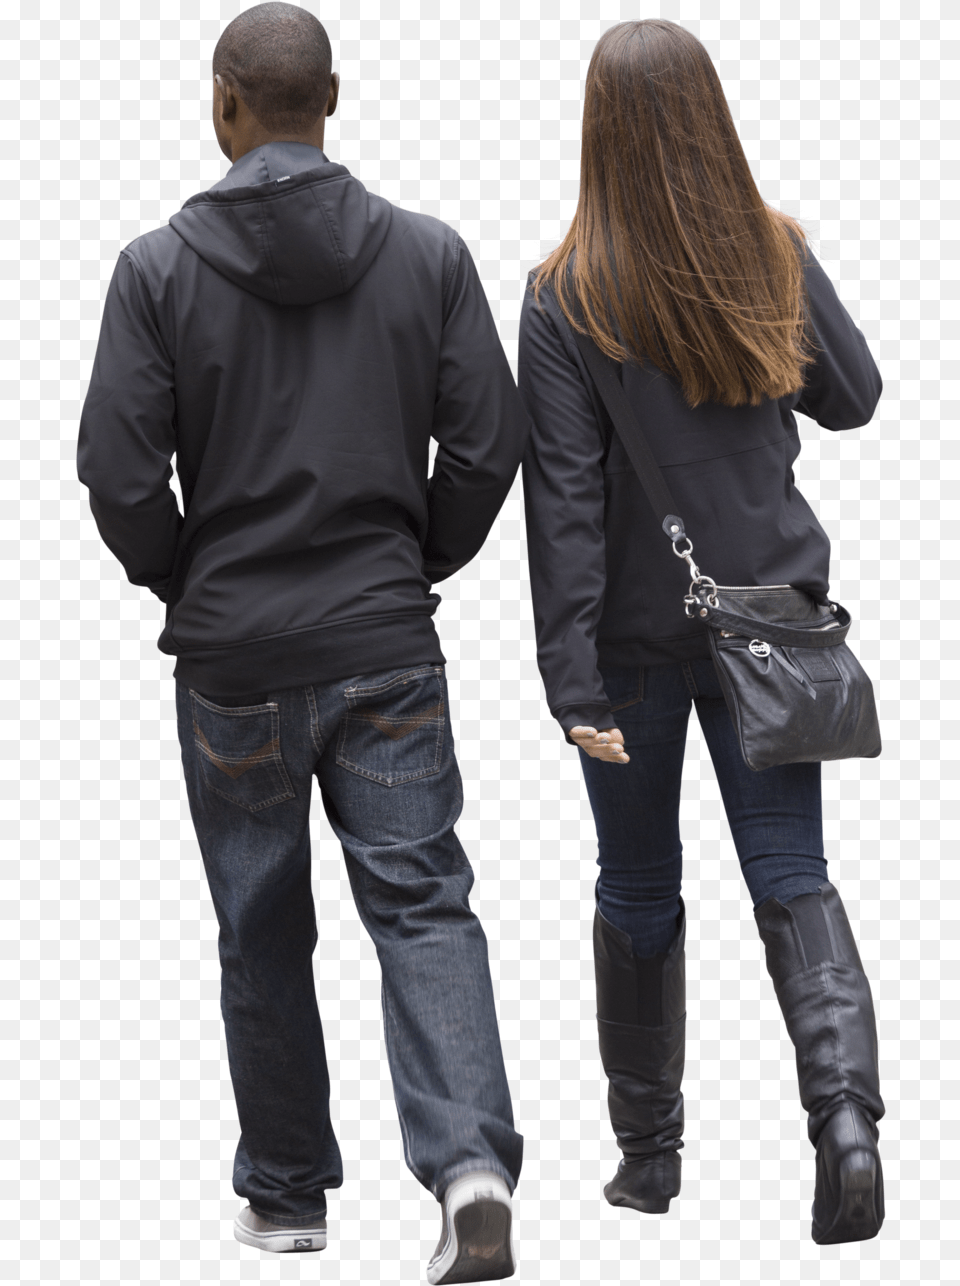 Download Hd People Walking Walking People, Pants, Clothing, Coat, Jeans Png Image